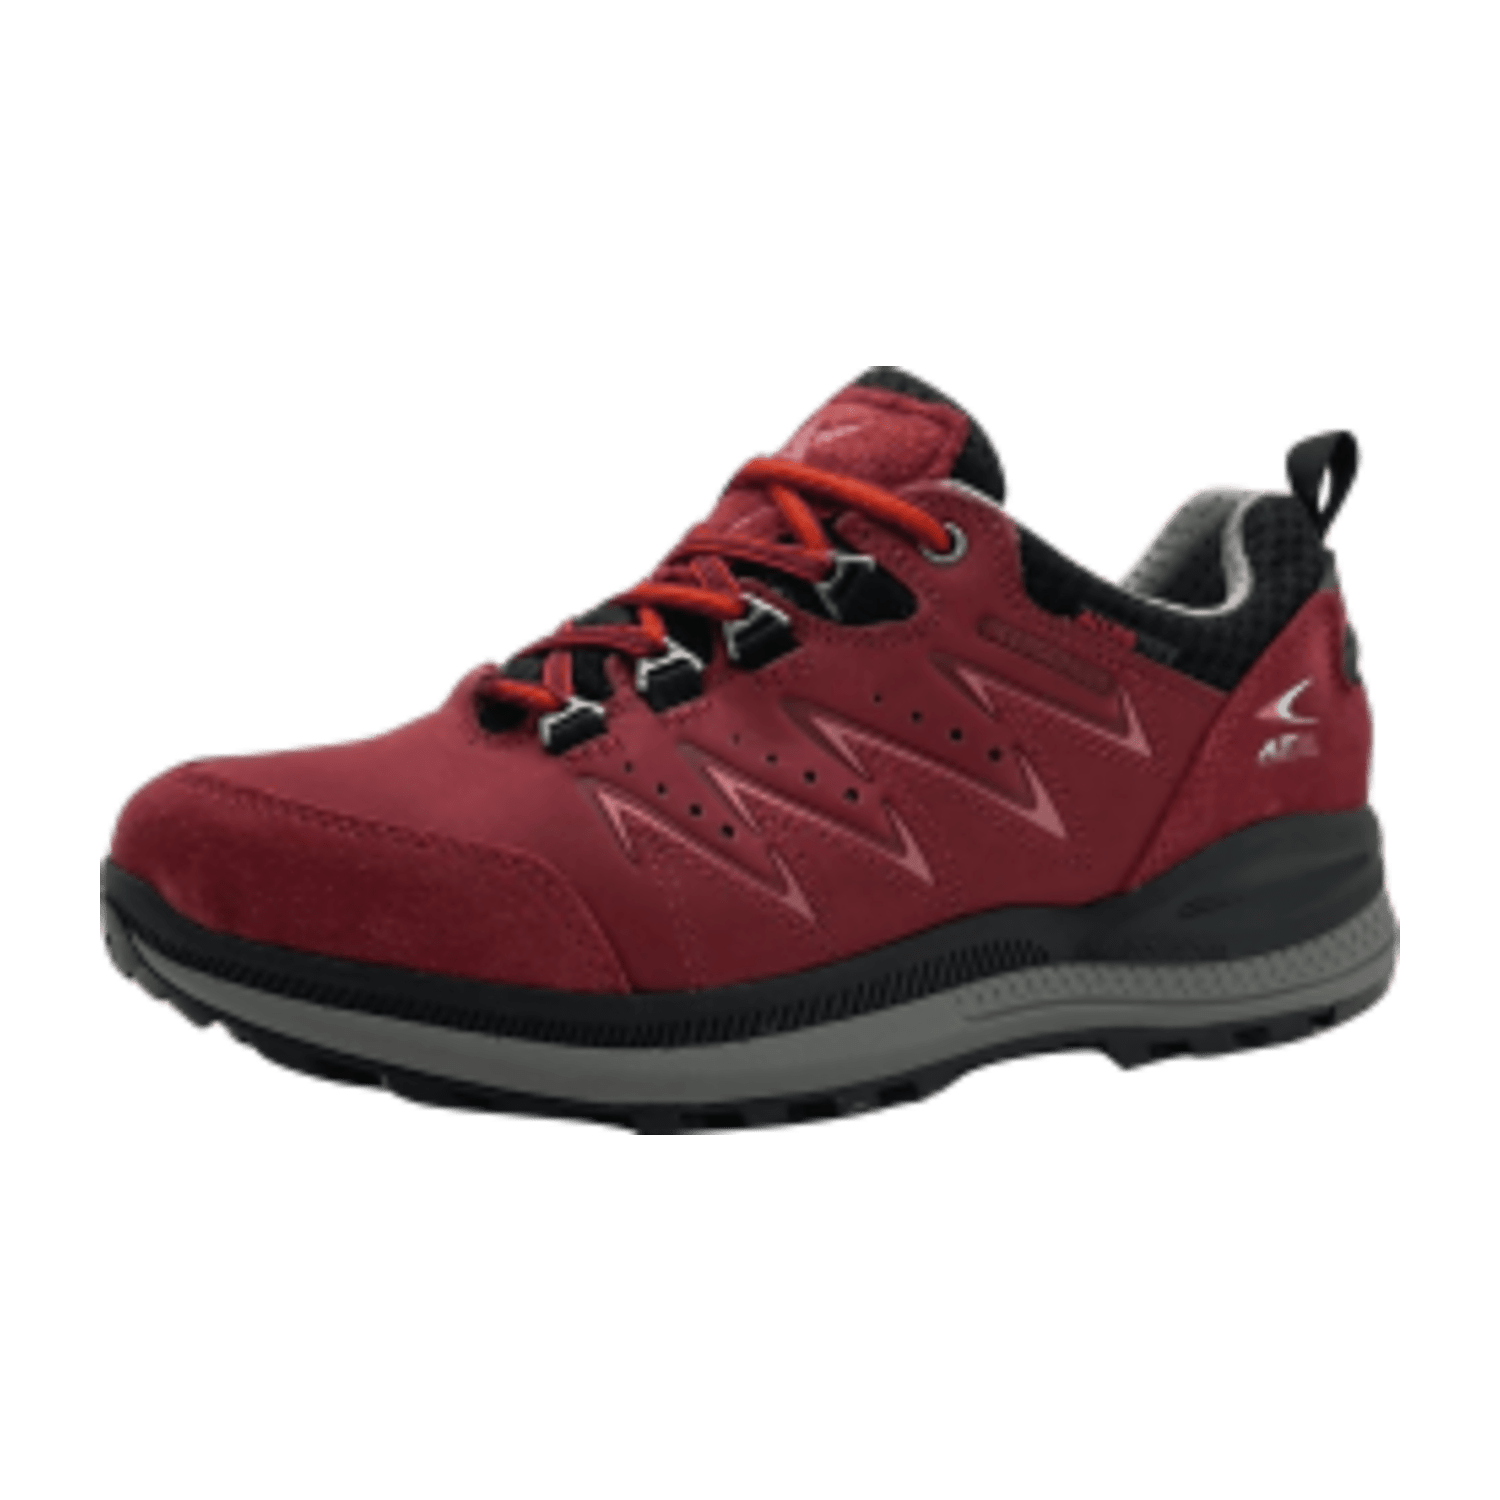 Allrounder SEJA-TEX Schuhe rot rosebrown P2007165